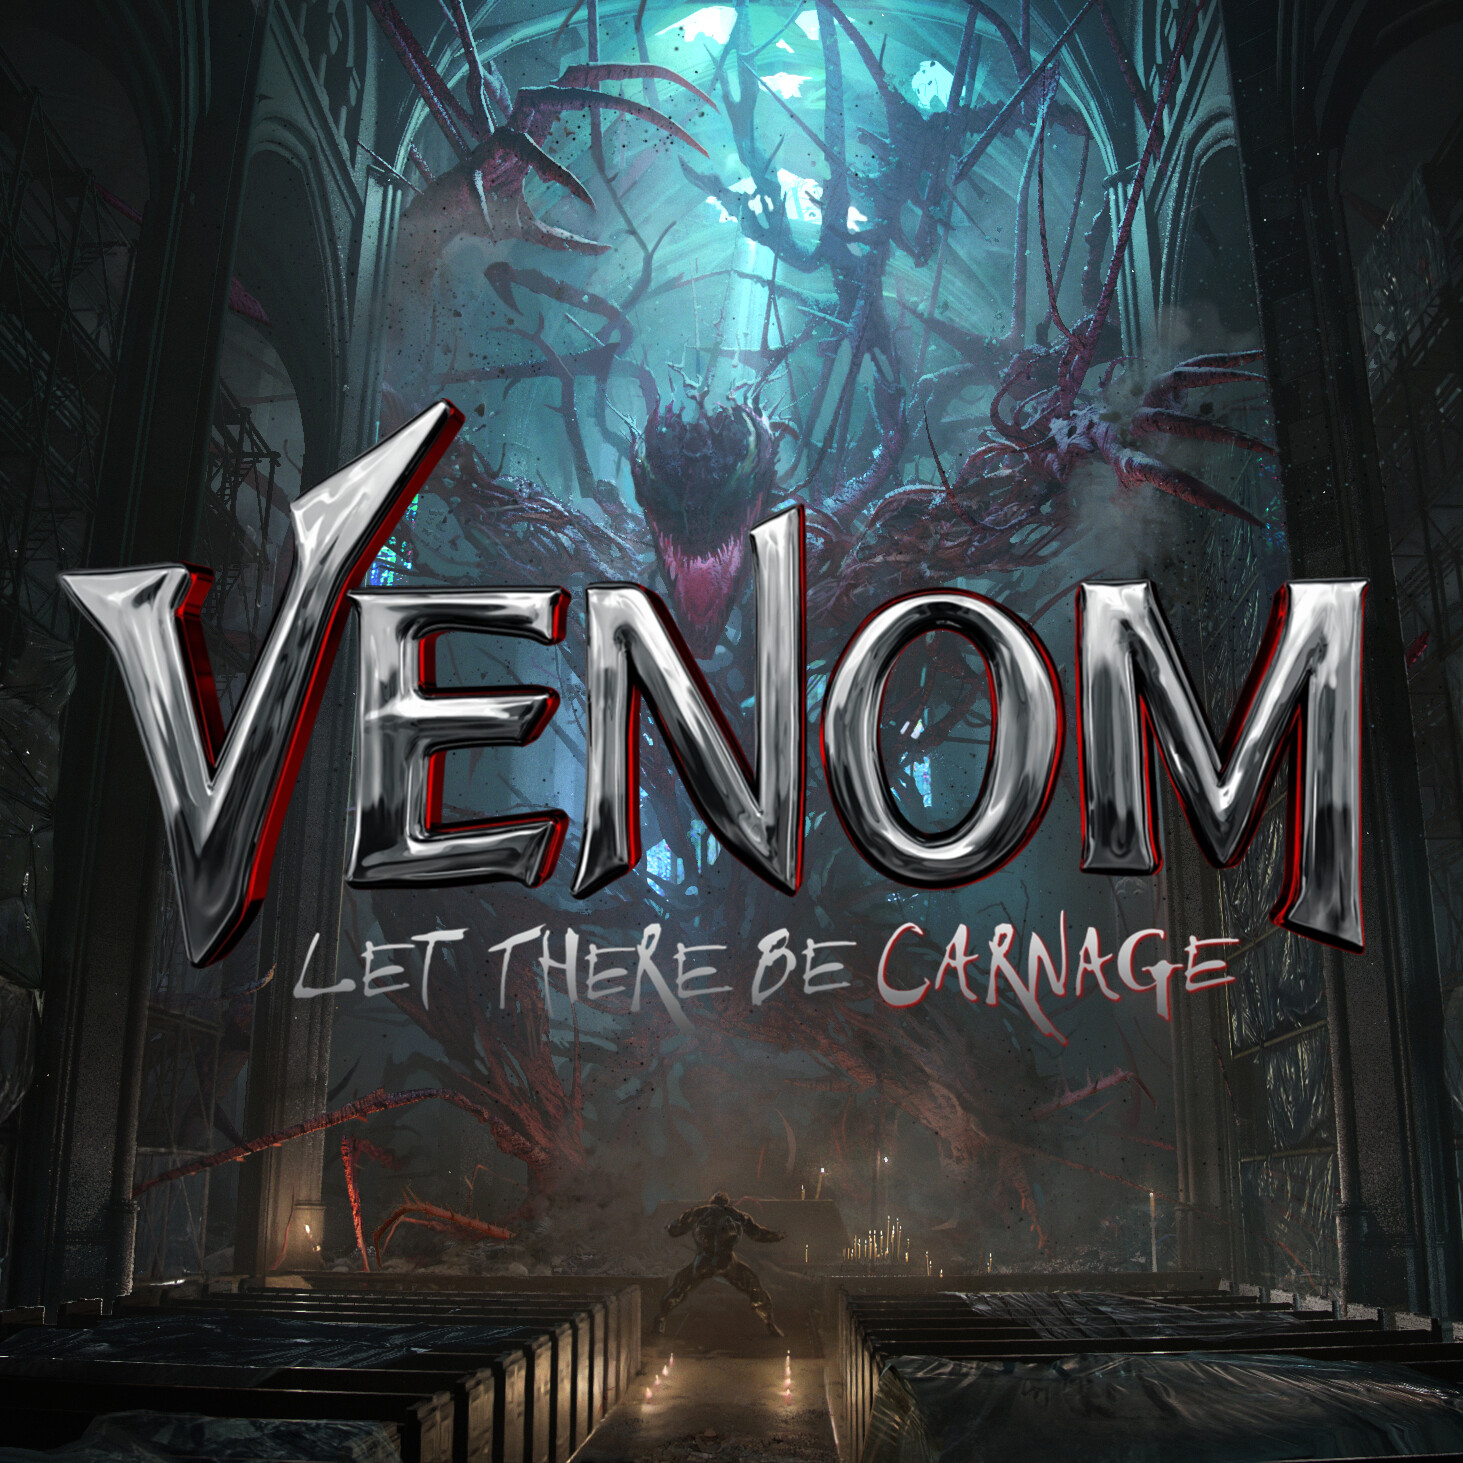 Venom, Let There be Carnage: Uber-Carnage